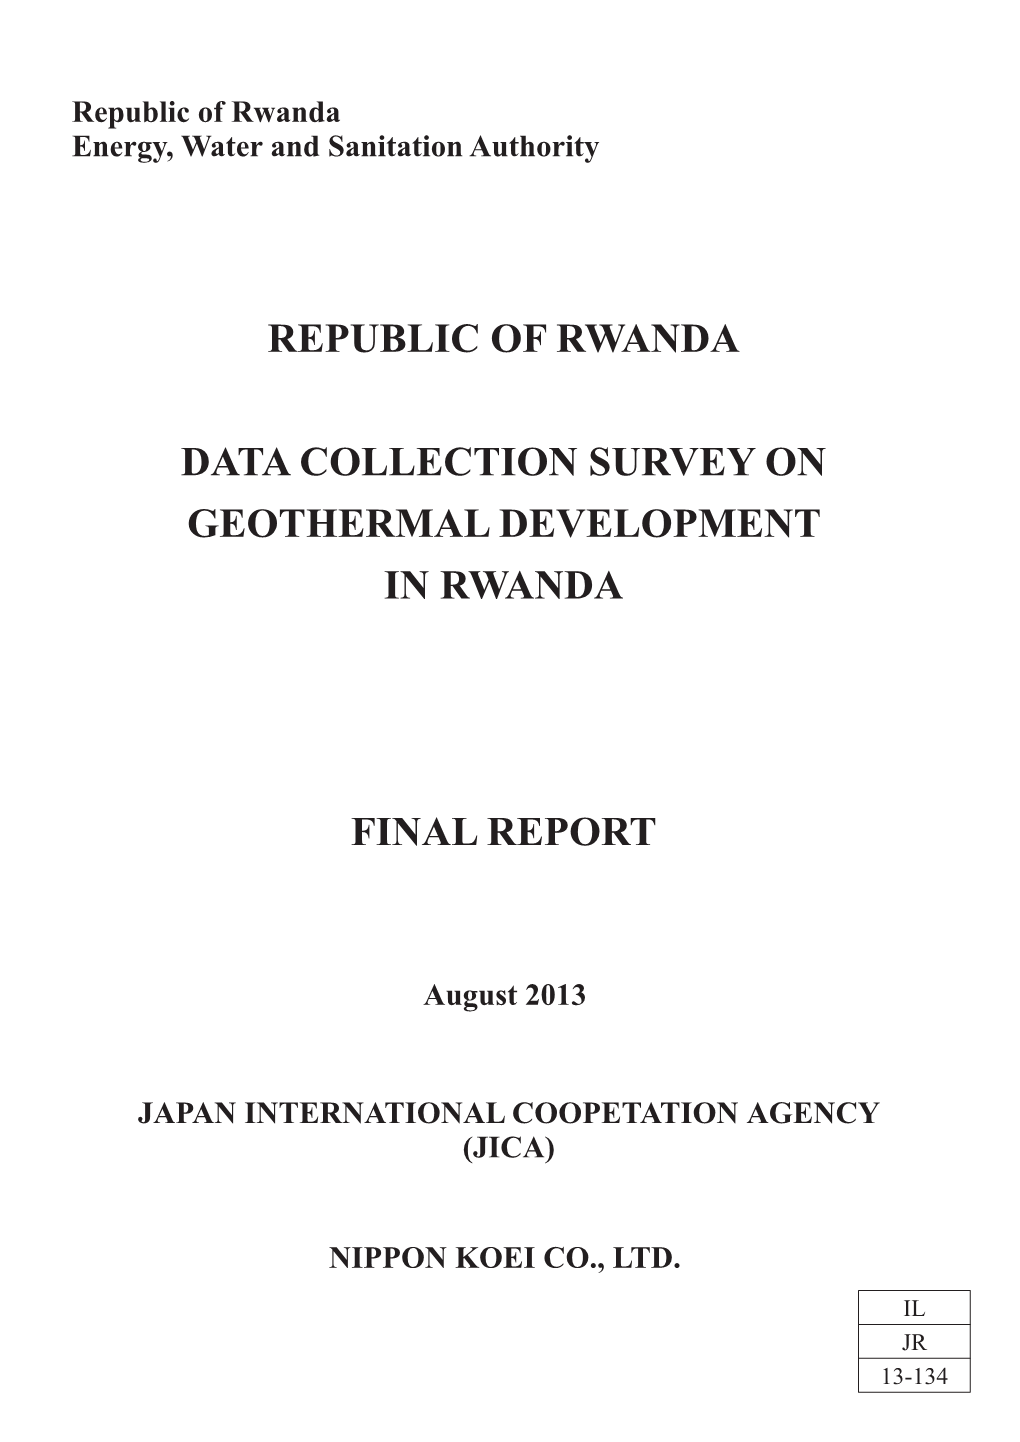 Republic of Rwanda Data Collection Survey on Geothermal Development